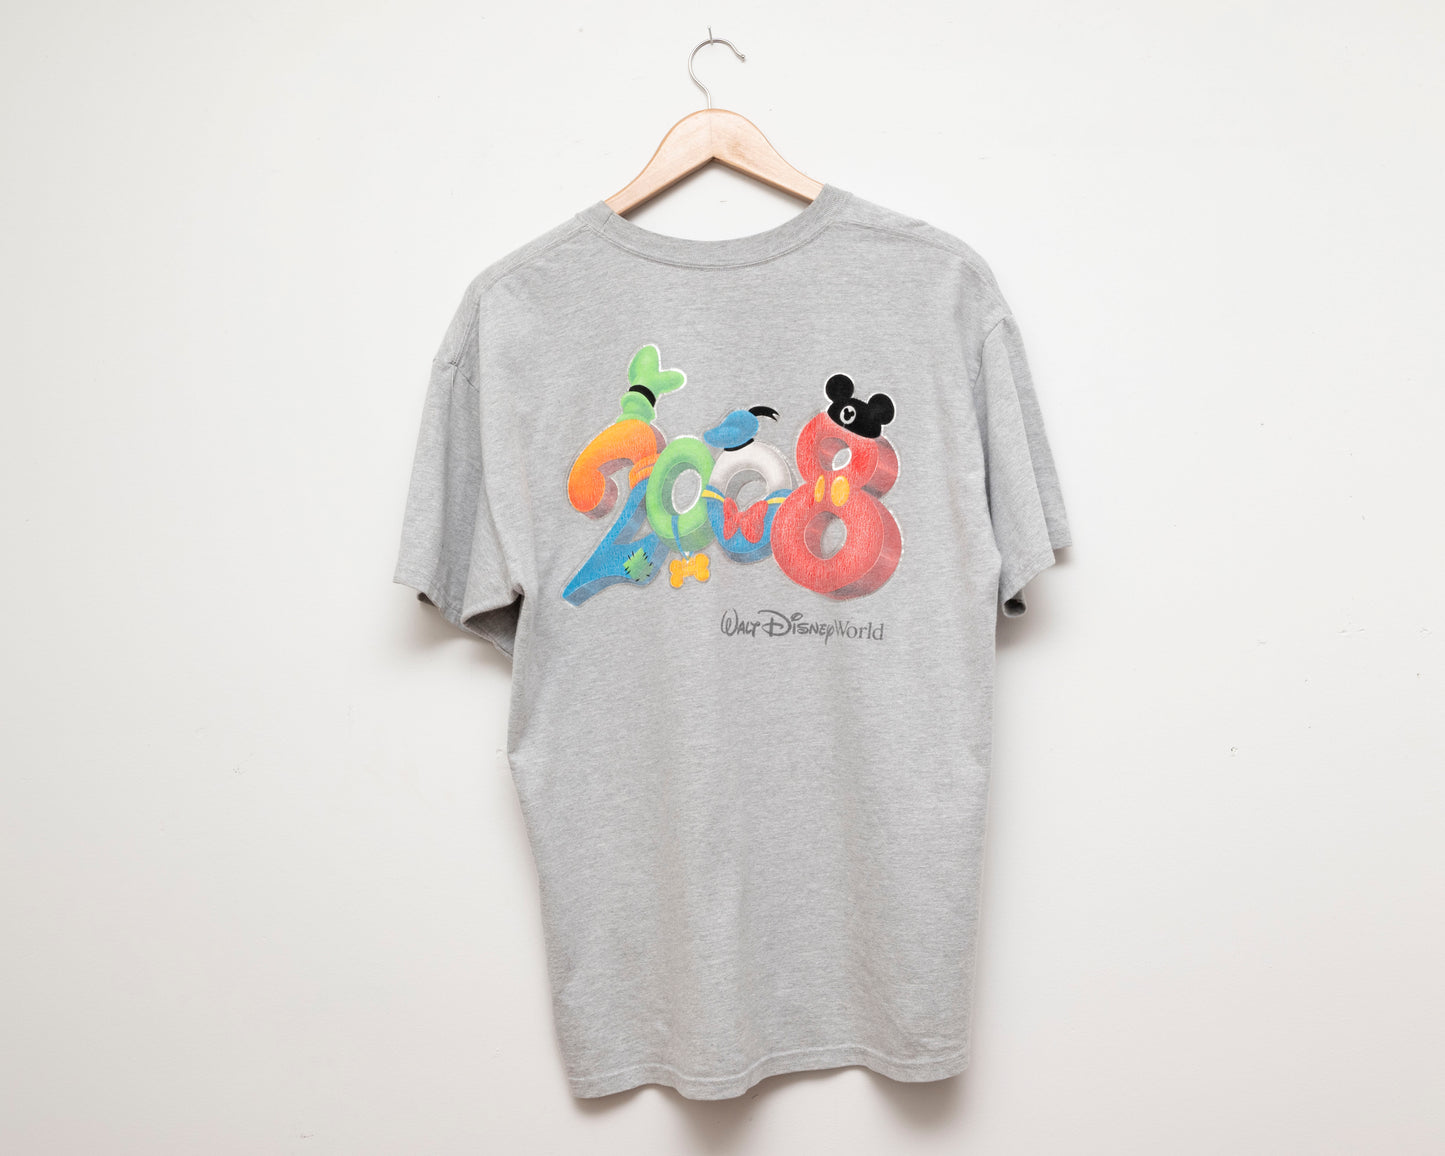 2008 Disney World t-shirt